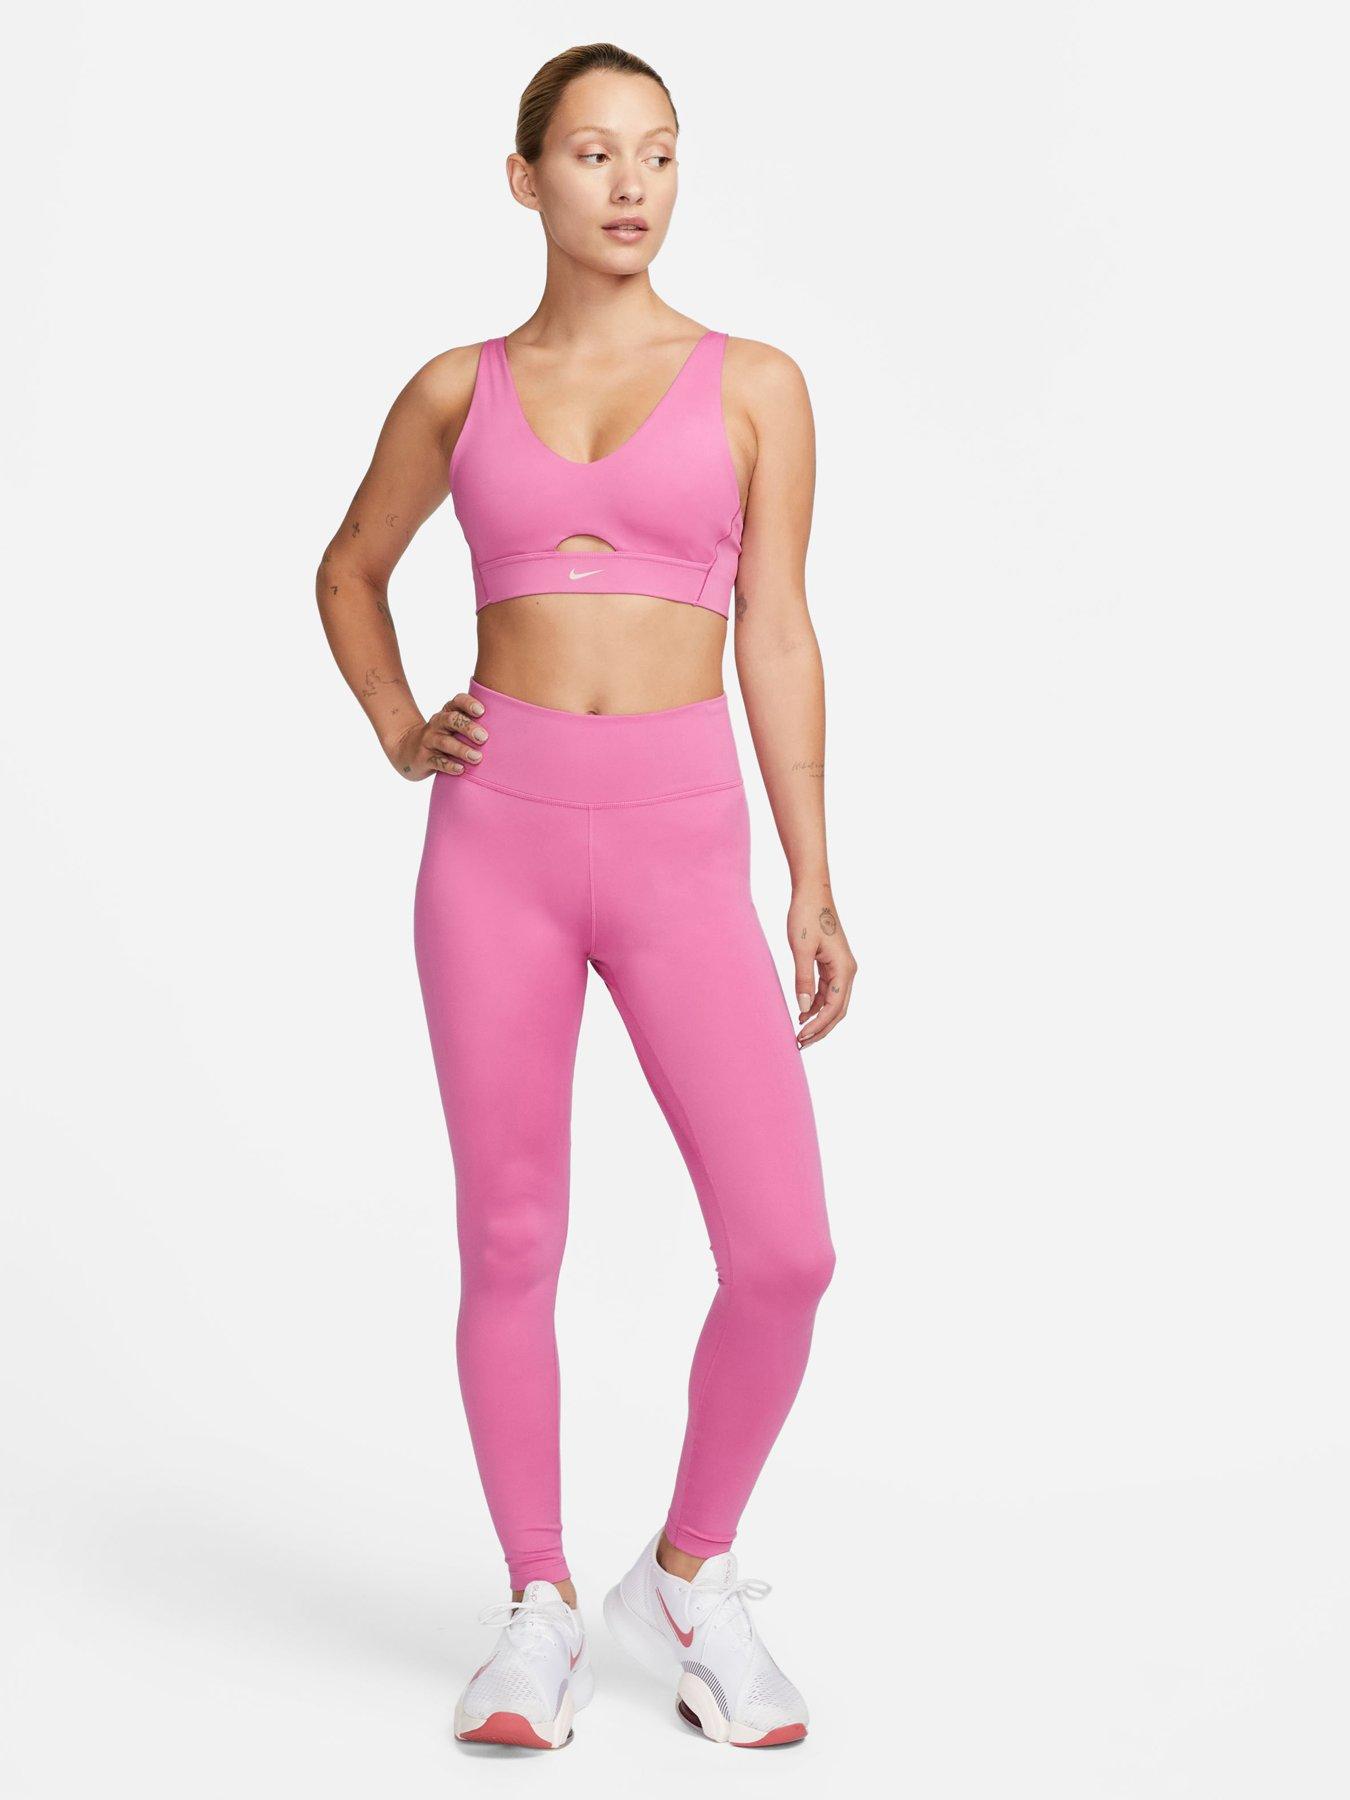 Nike Indy Plunge Cutout Bra - Pink